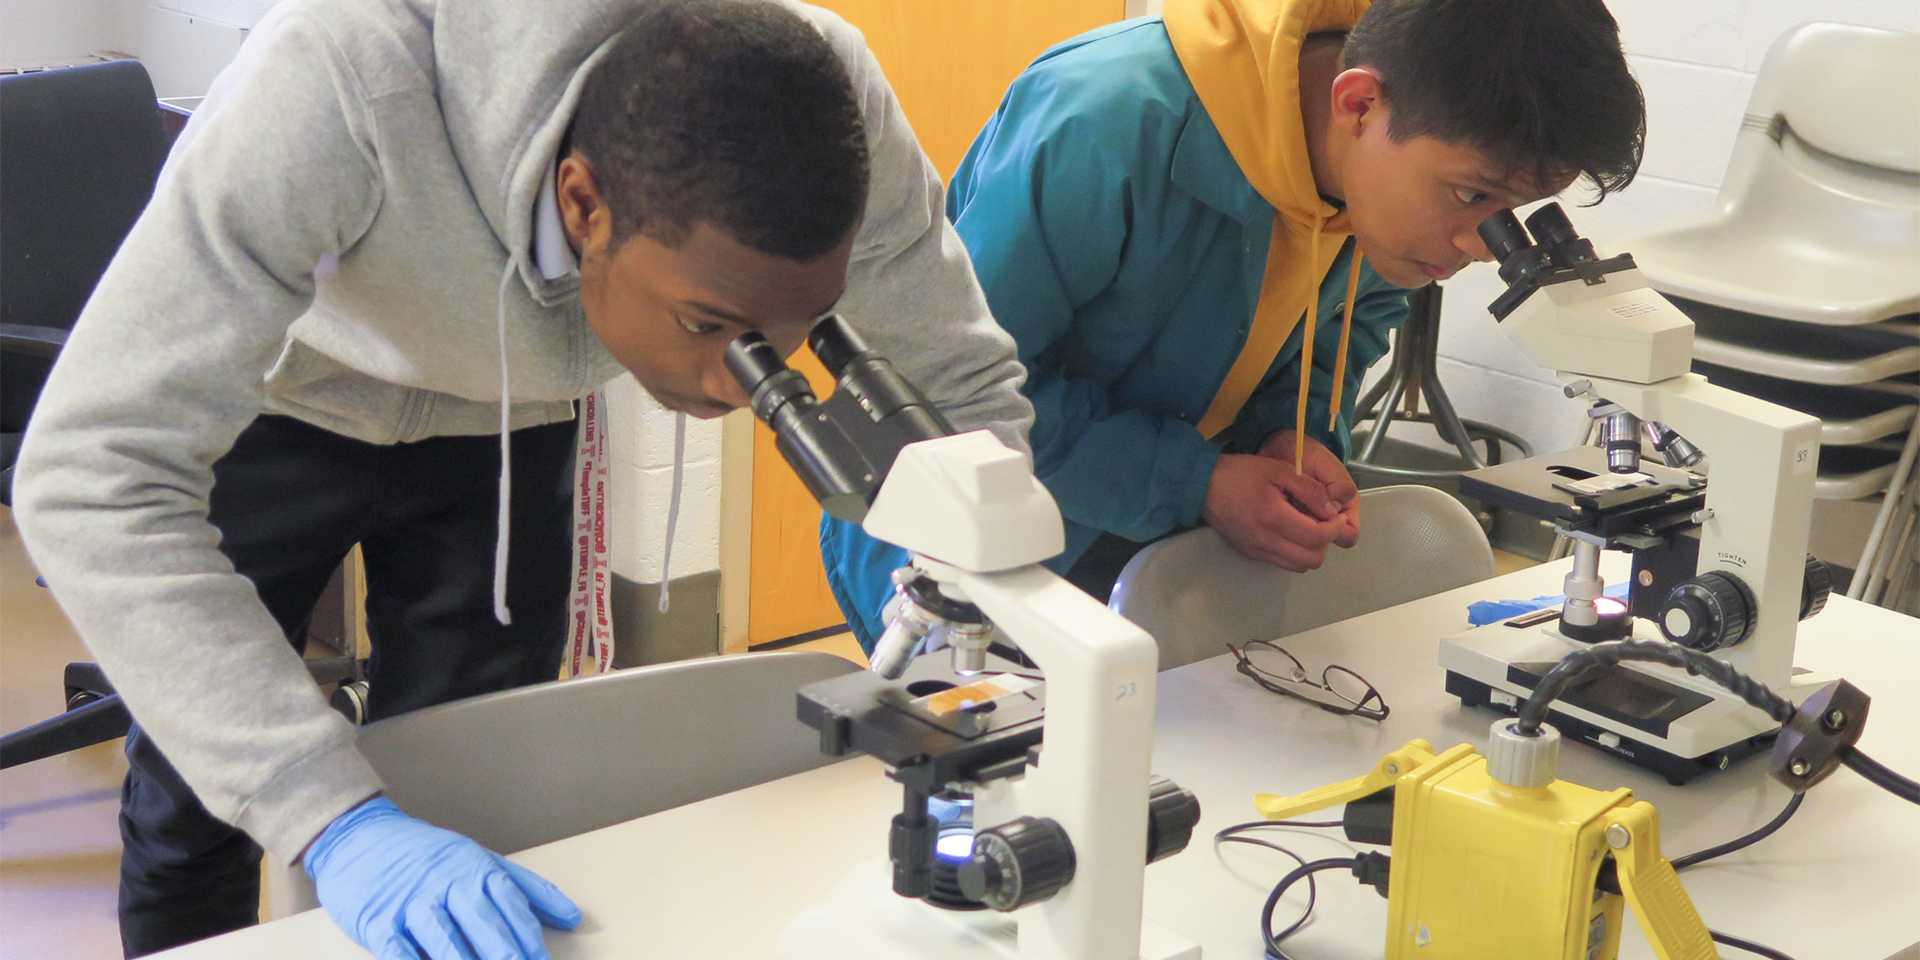 Two teen boys looking through microscopes